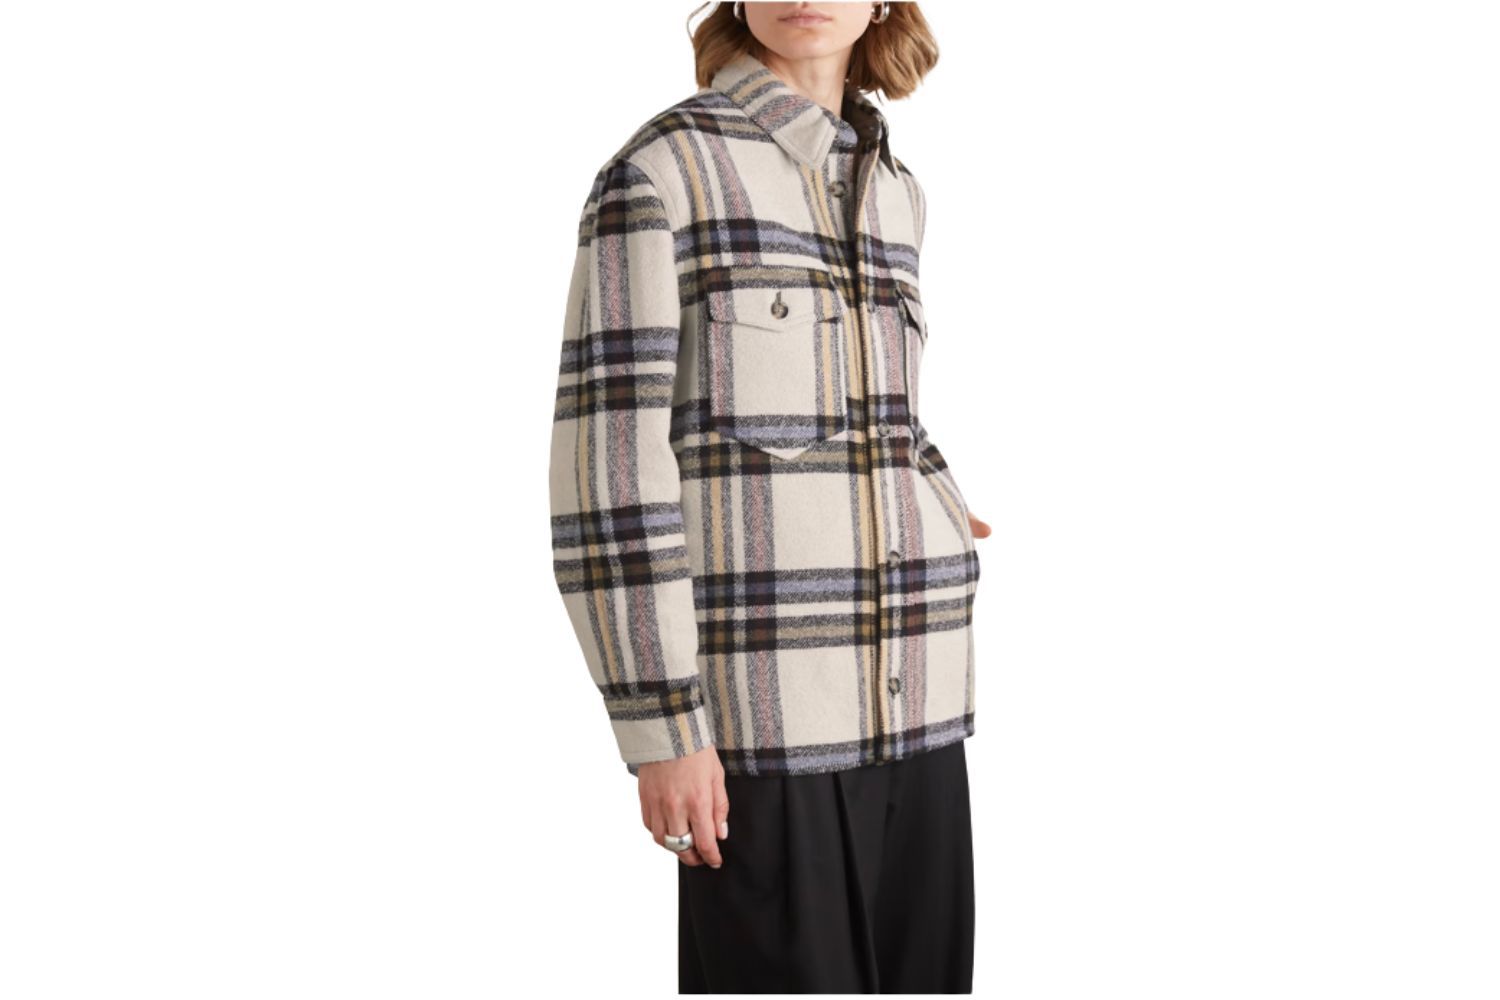 https: //www. net-a- porter. com/en-us/shop/product/isabel-marbar-etoile/clothing/casual-jurats/ervey-checked-flanell-jacket/43769801094941619